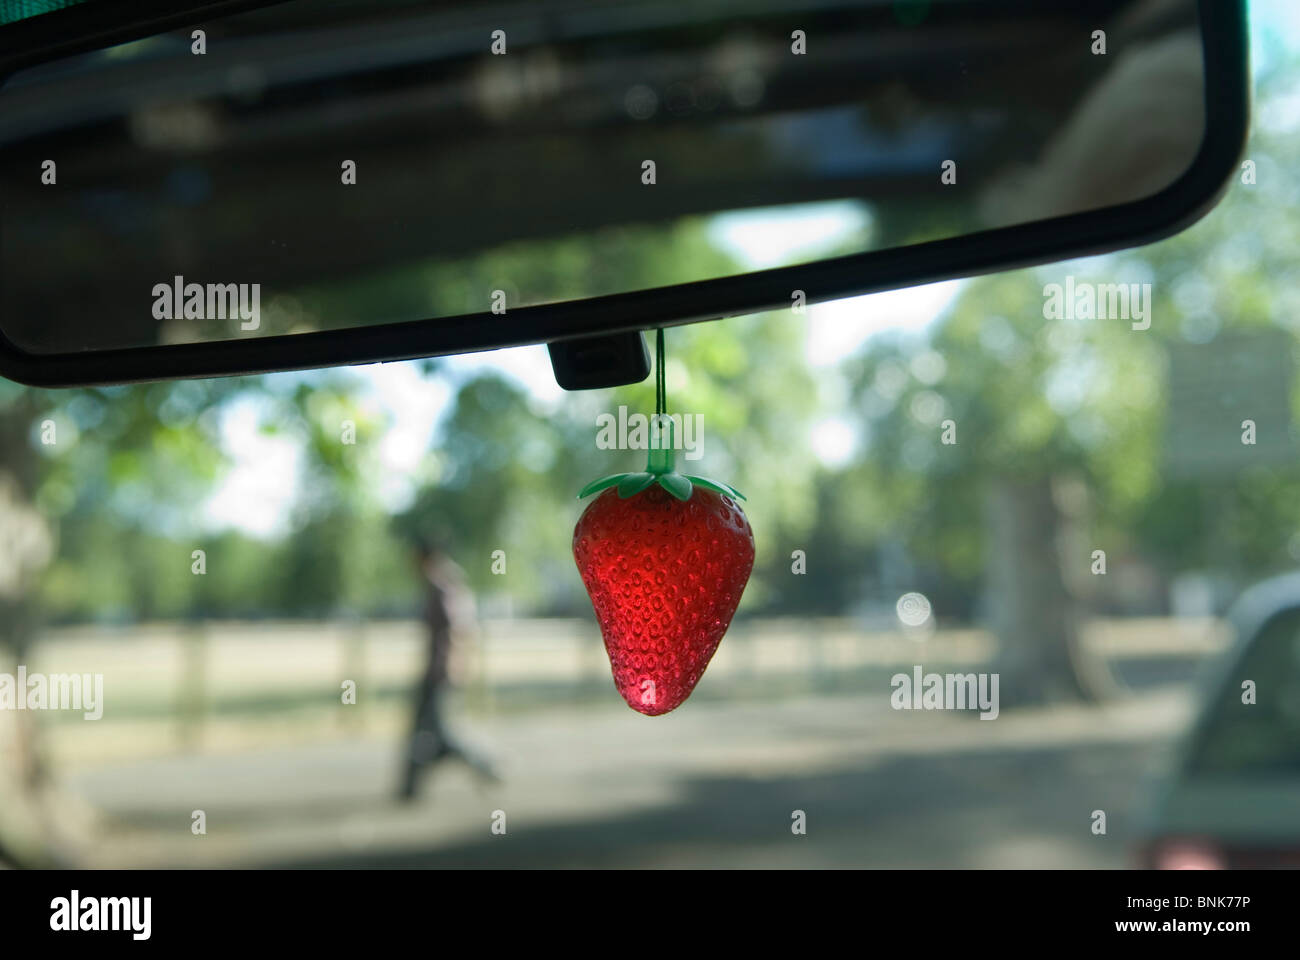 https://c8.alamy.com/comp/BNK77P/car-air-freshener-hanging-from-internal-rear-view-wing-mirror-homer-BNK77P.jpg